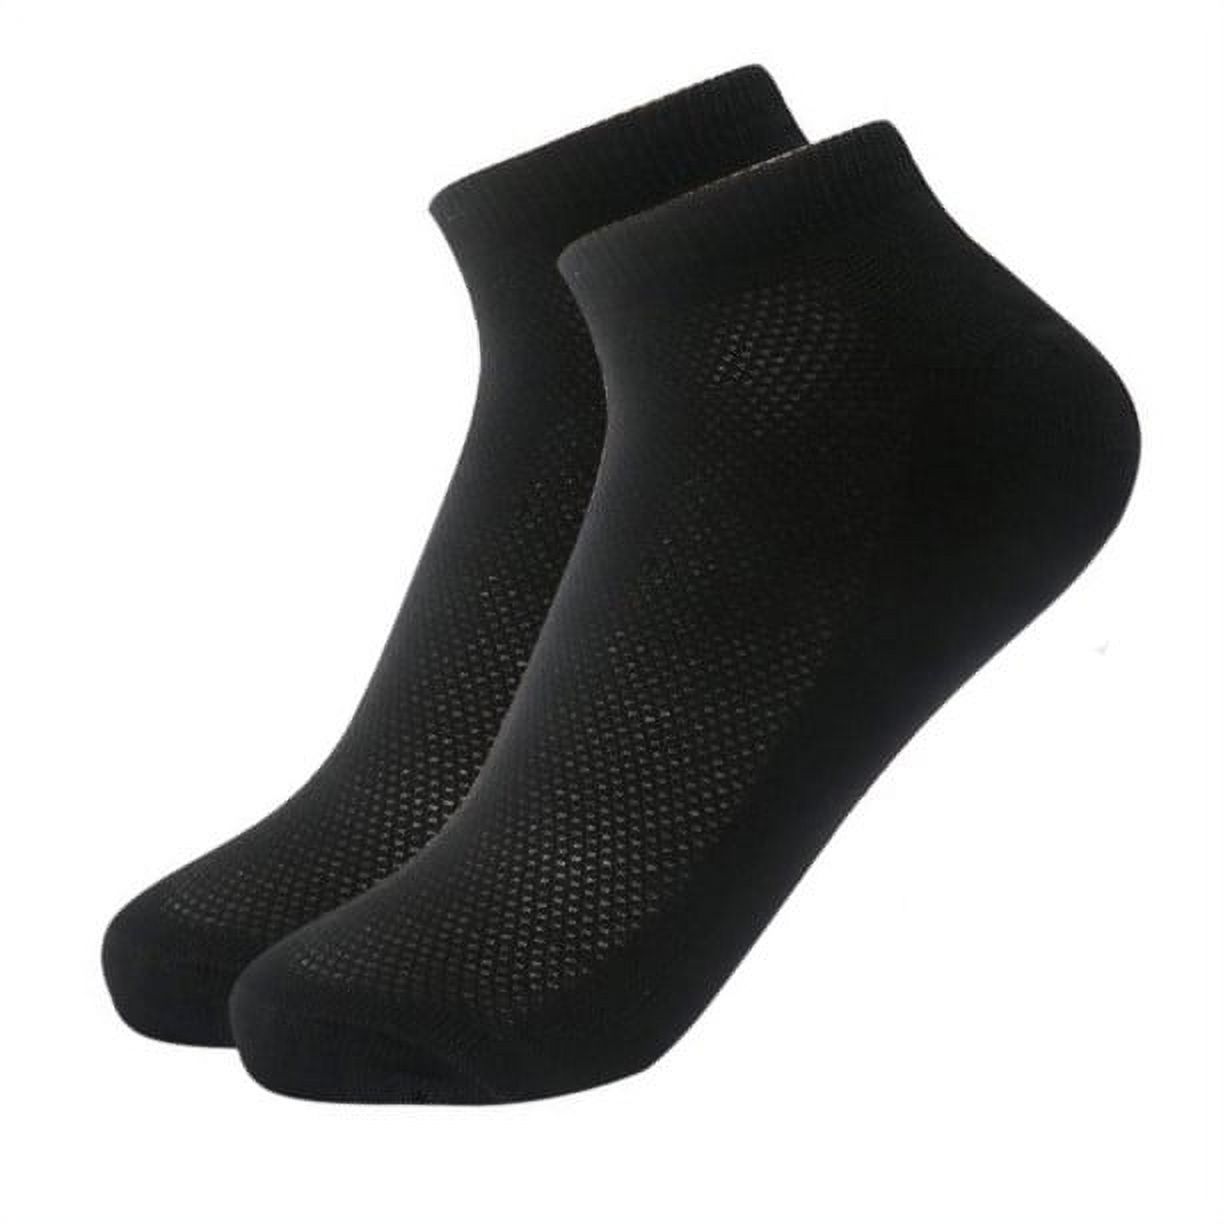 Ankle Socks 10 Pairs – No Show Thin Socks for Men Socks for Women Running Socks Invisible Trainer Socks 10 Pairs per Pack Sports Socks size 6-9 Black - image 1 of 3